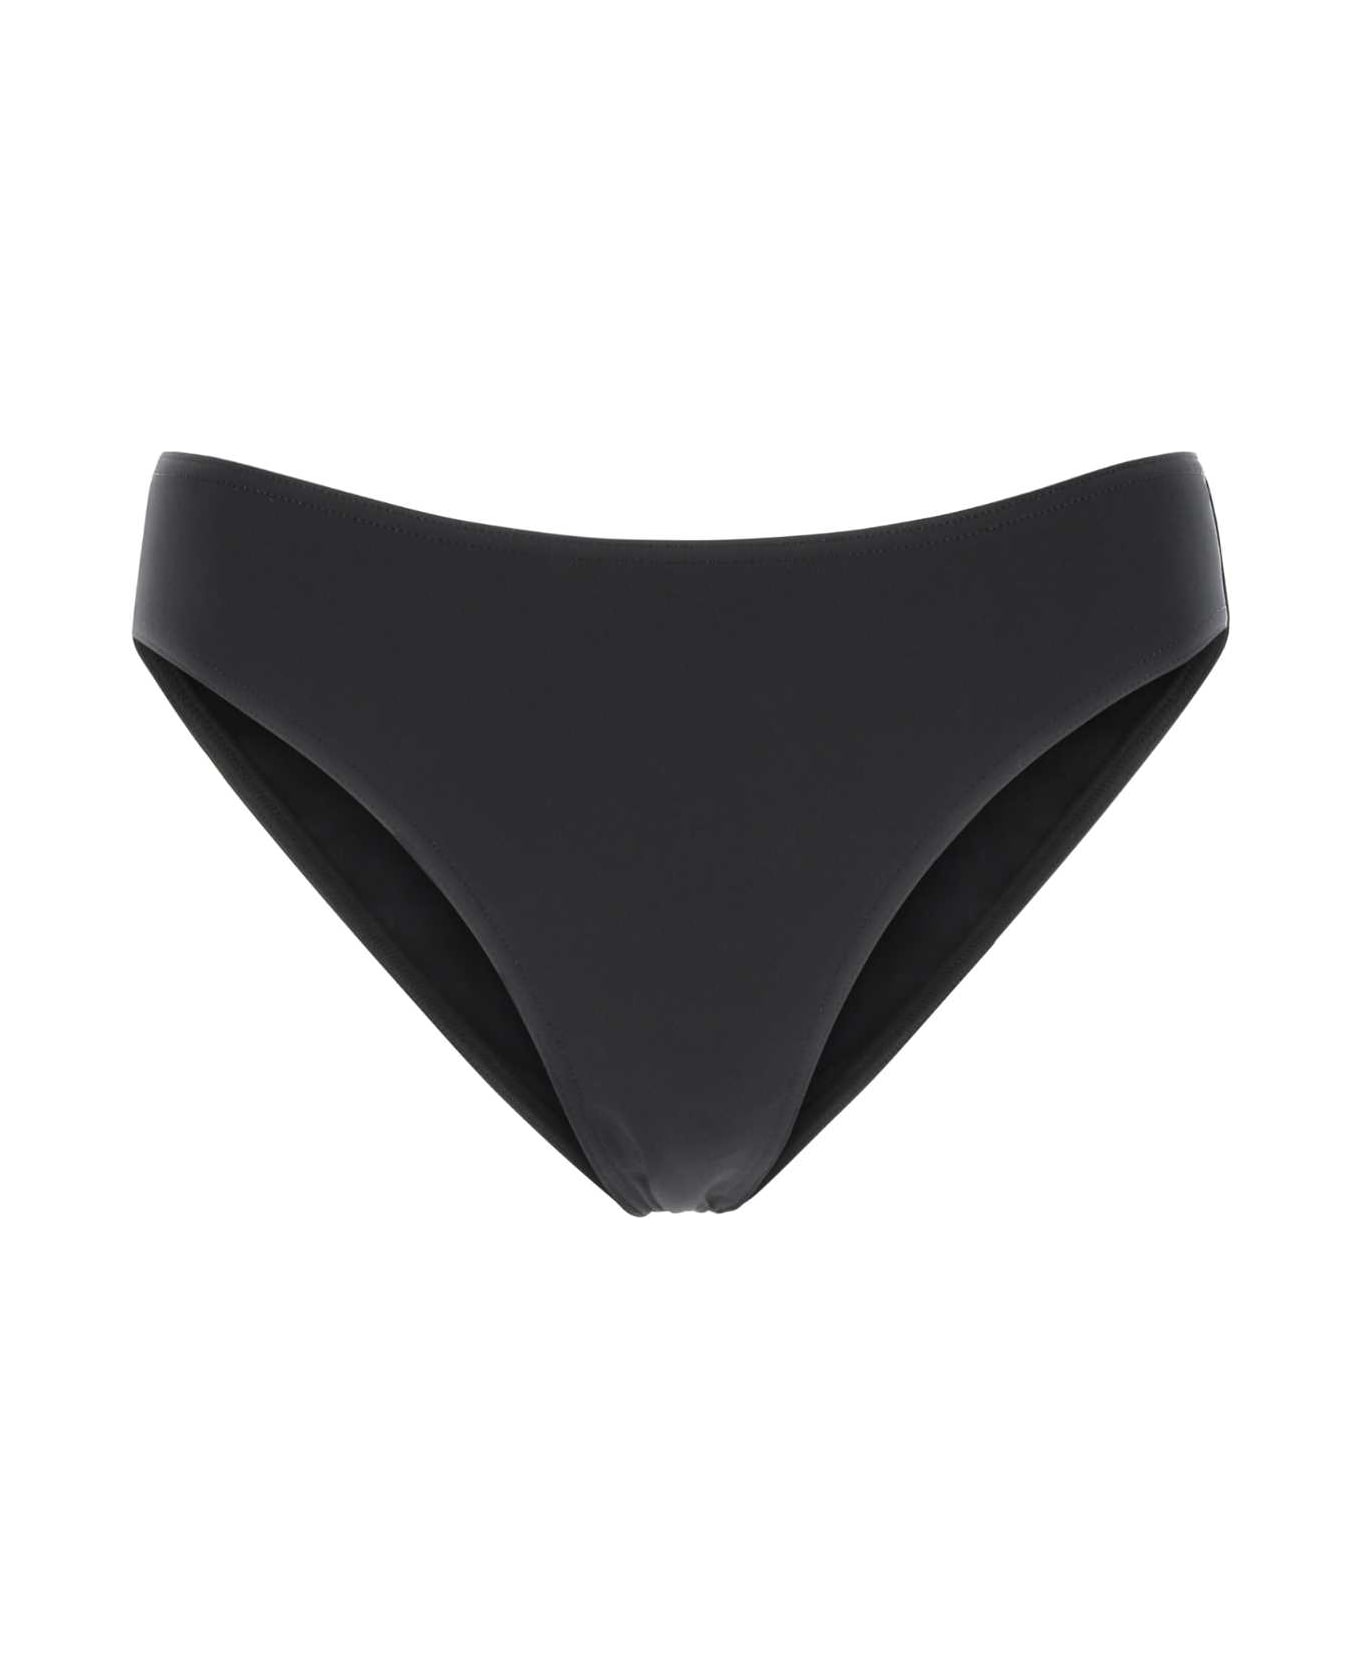 Black Stretch Nylon Bikini Bottom - 1